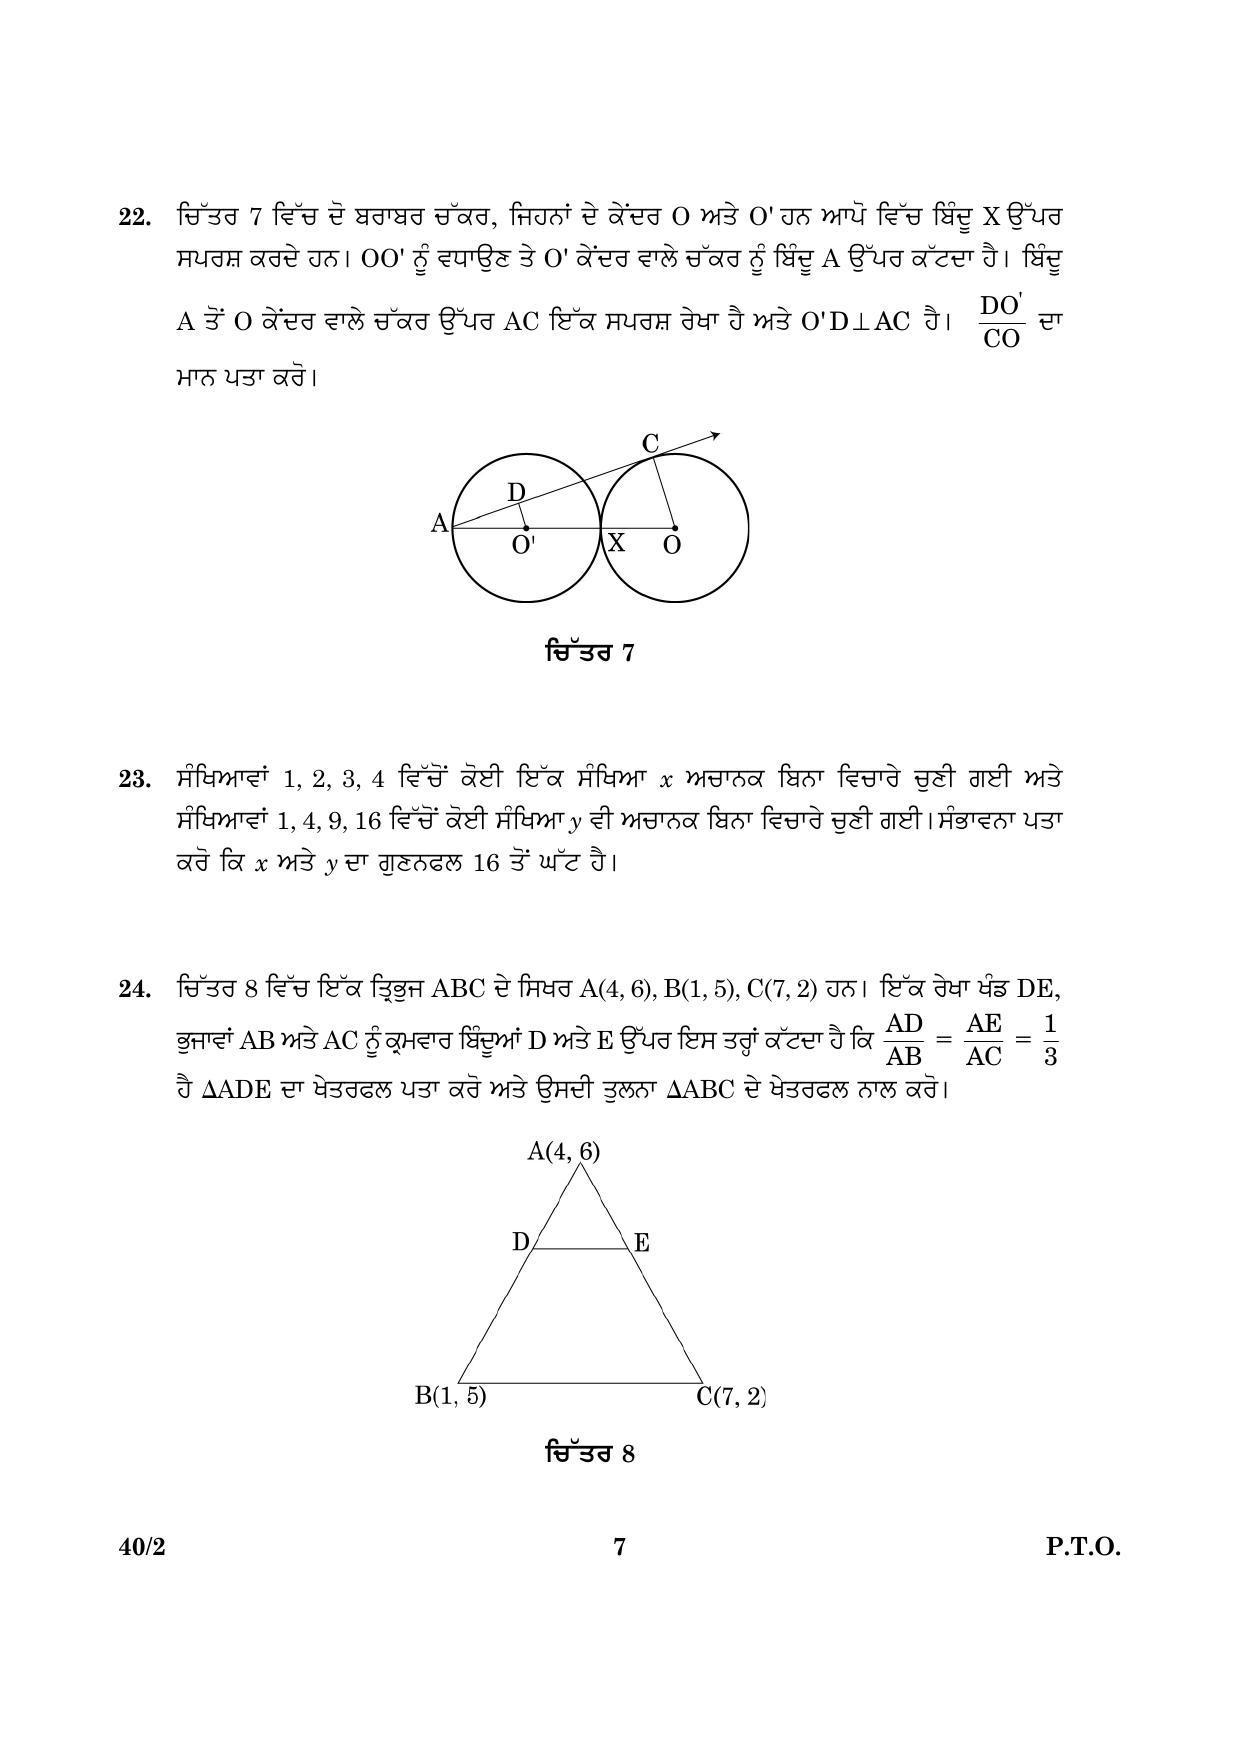 CBSE Class 10 040 Mathematics Punjabi 2 2016 Question Paper - Page 7